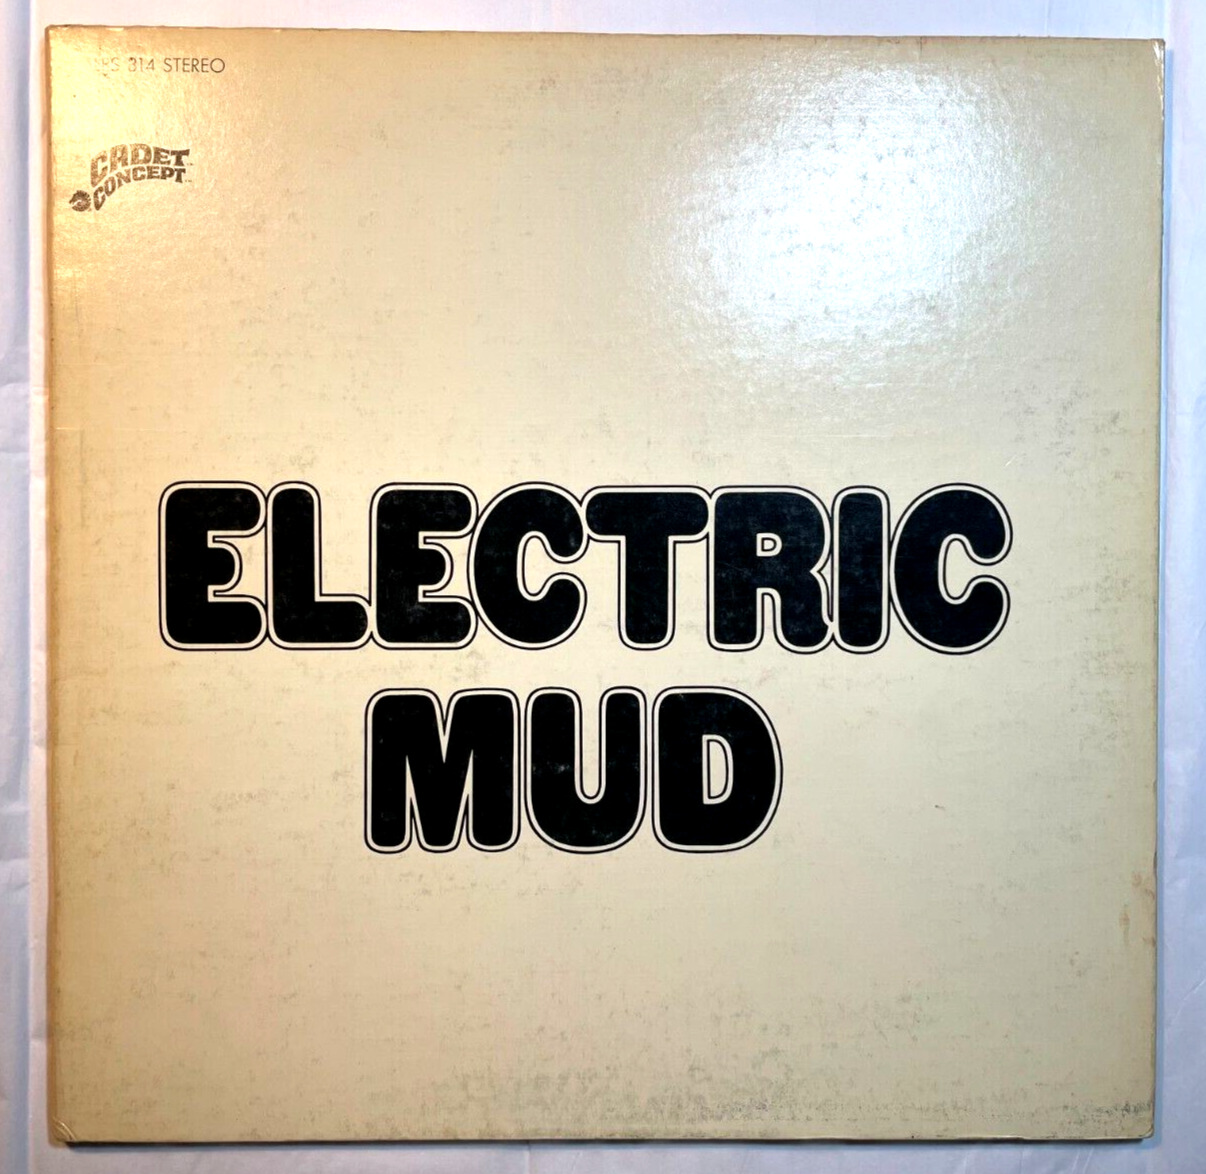 VINTAGE 1968 VINYL LP RECORD ELECTRIC MUD CADET CONCEPT MUDDY WATERS MORGANFIELD